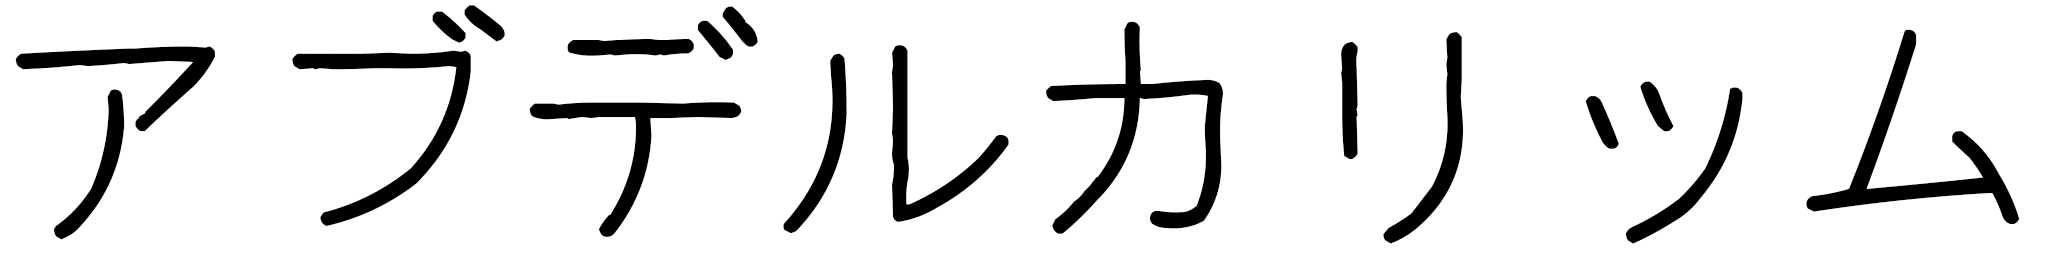 Abdelkarim en japonais